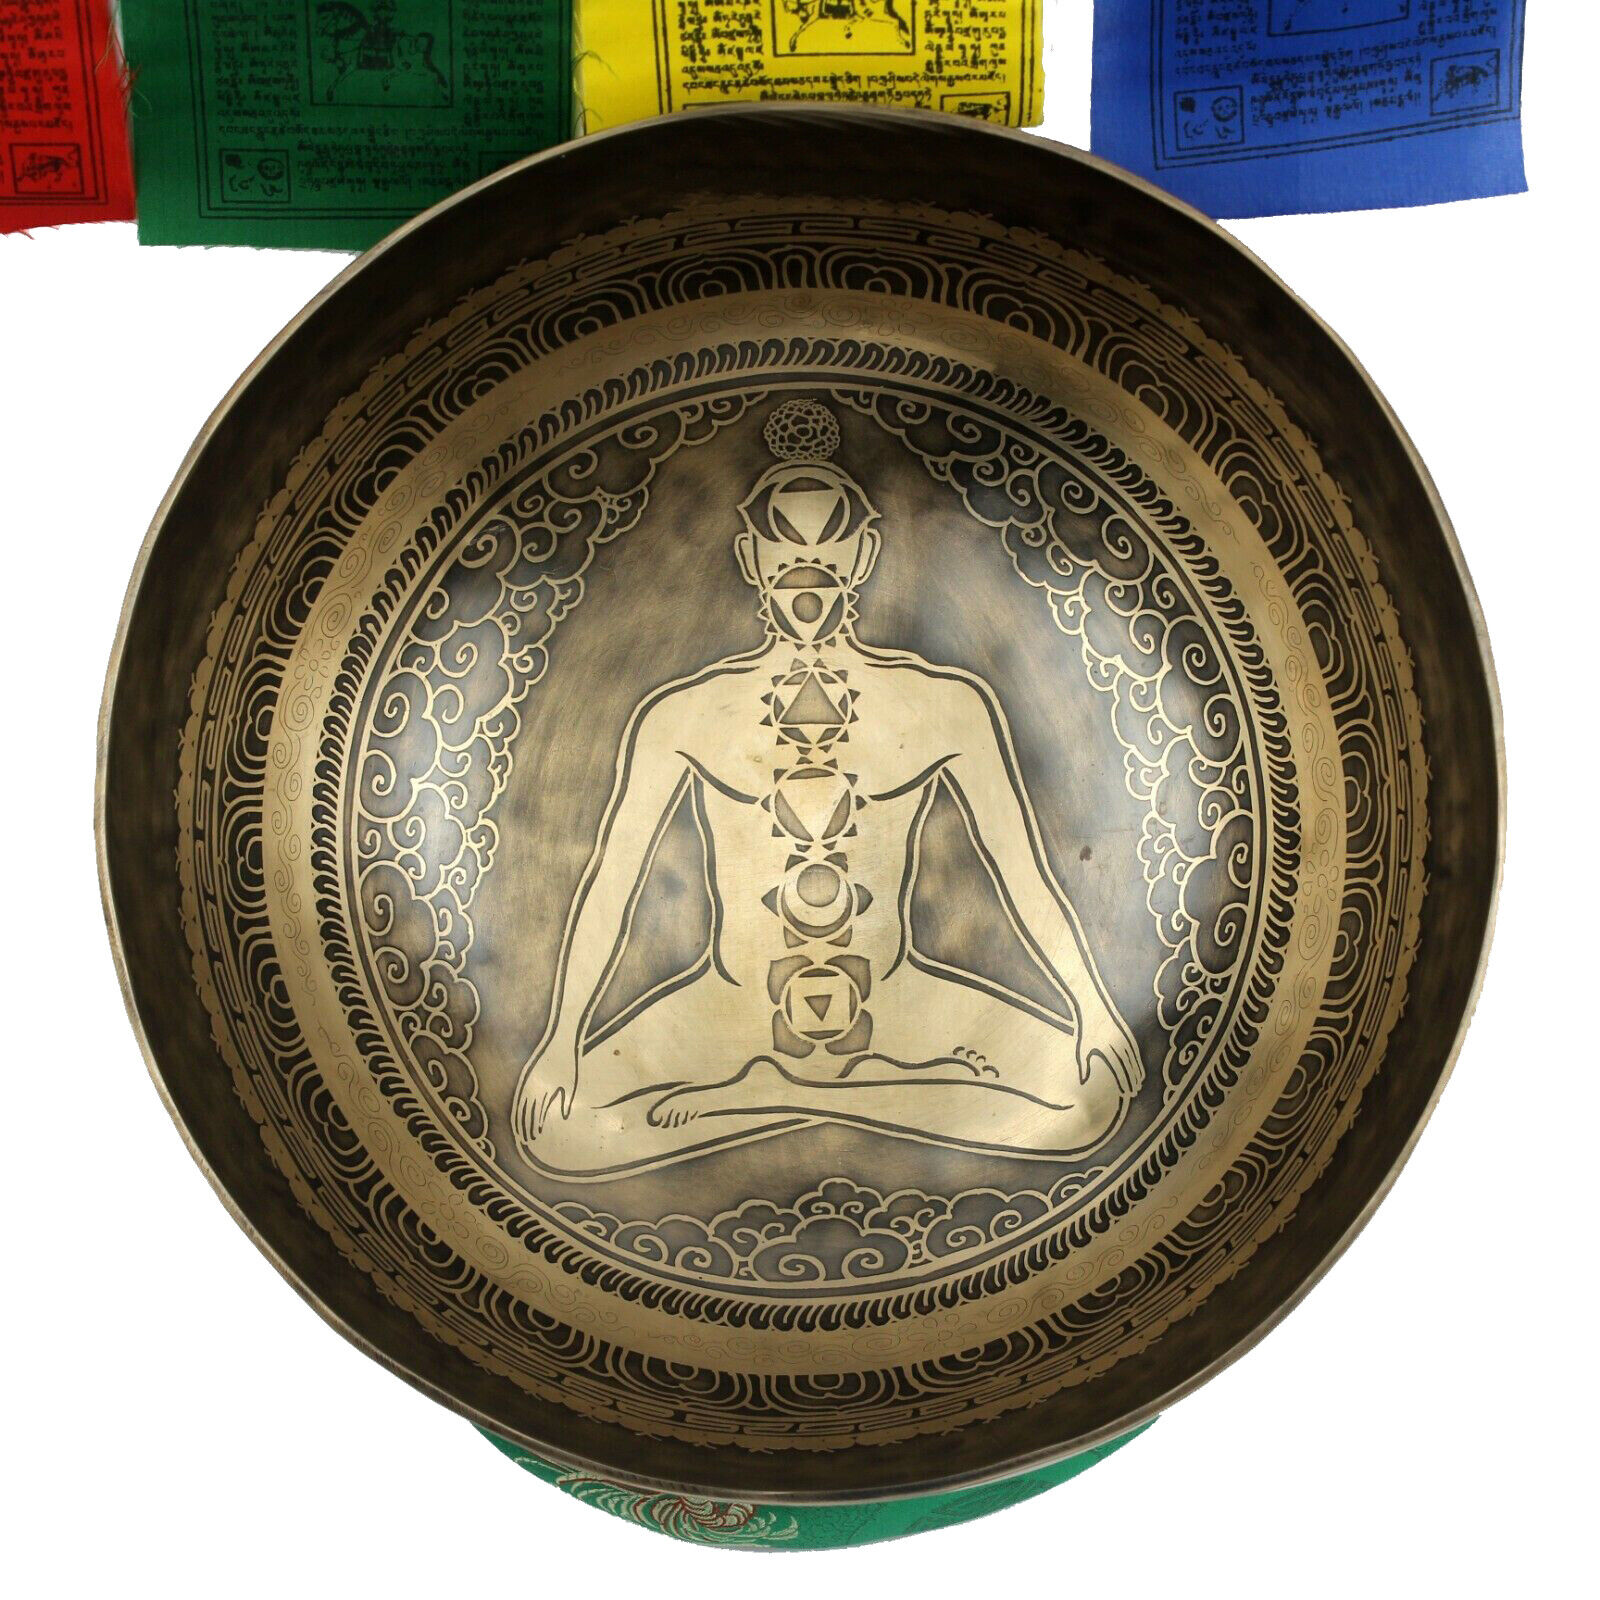 11 Inch Singing Bowl Meditation Sound Healing Yoga- Nepalese Sound Bowls chakras